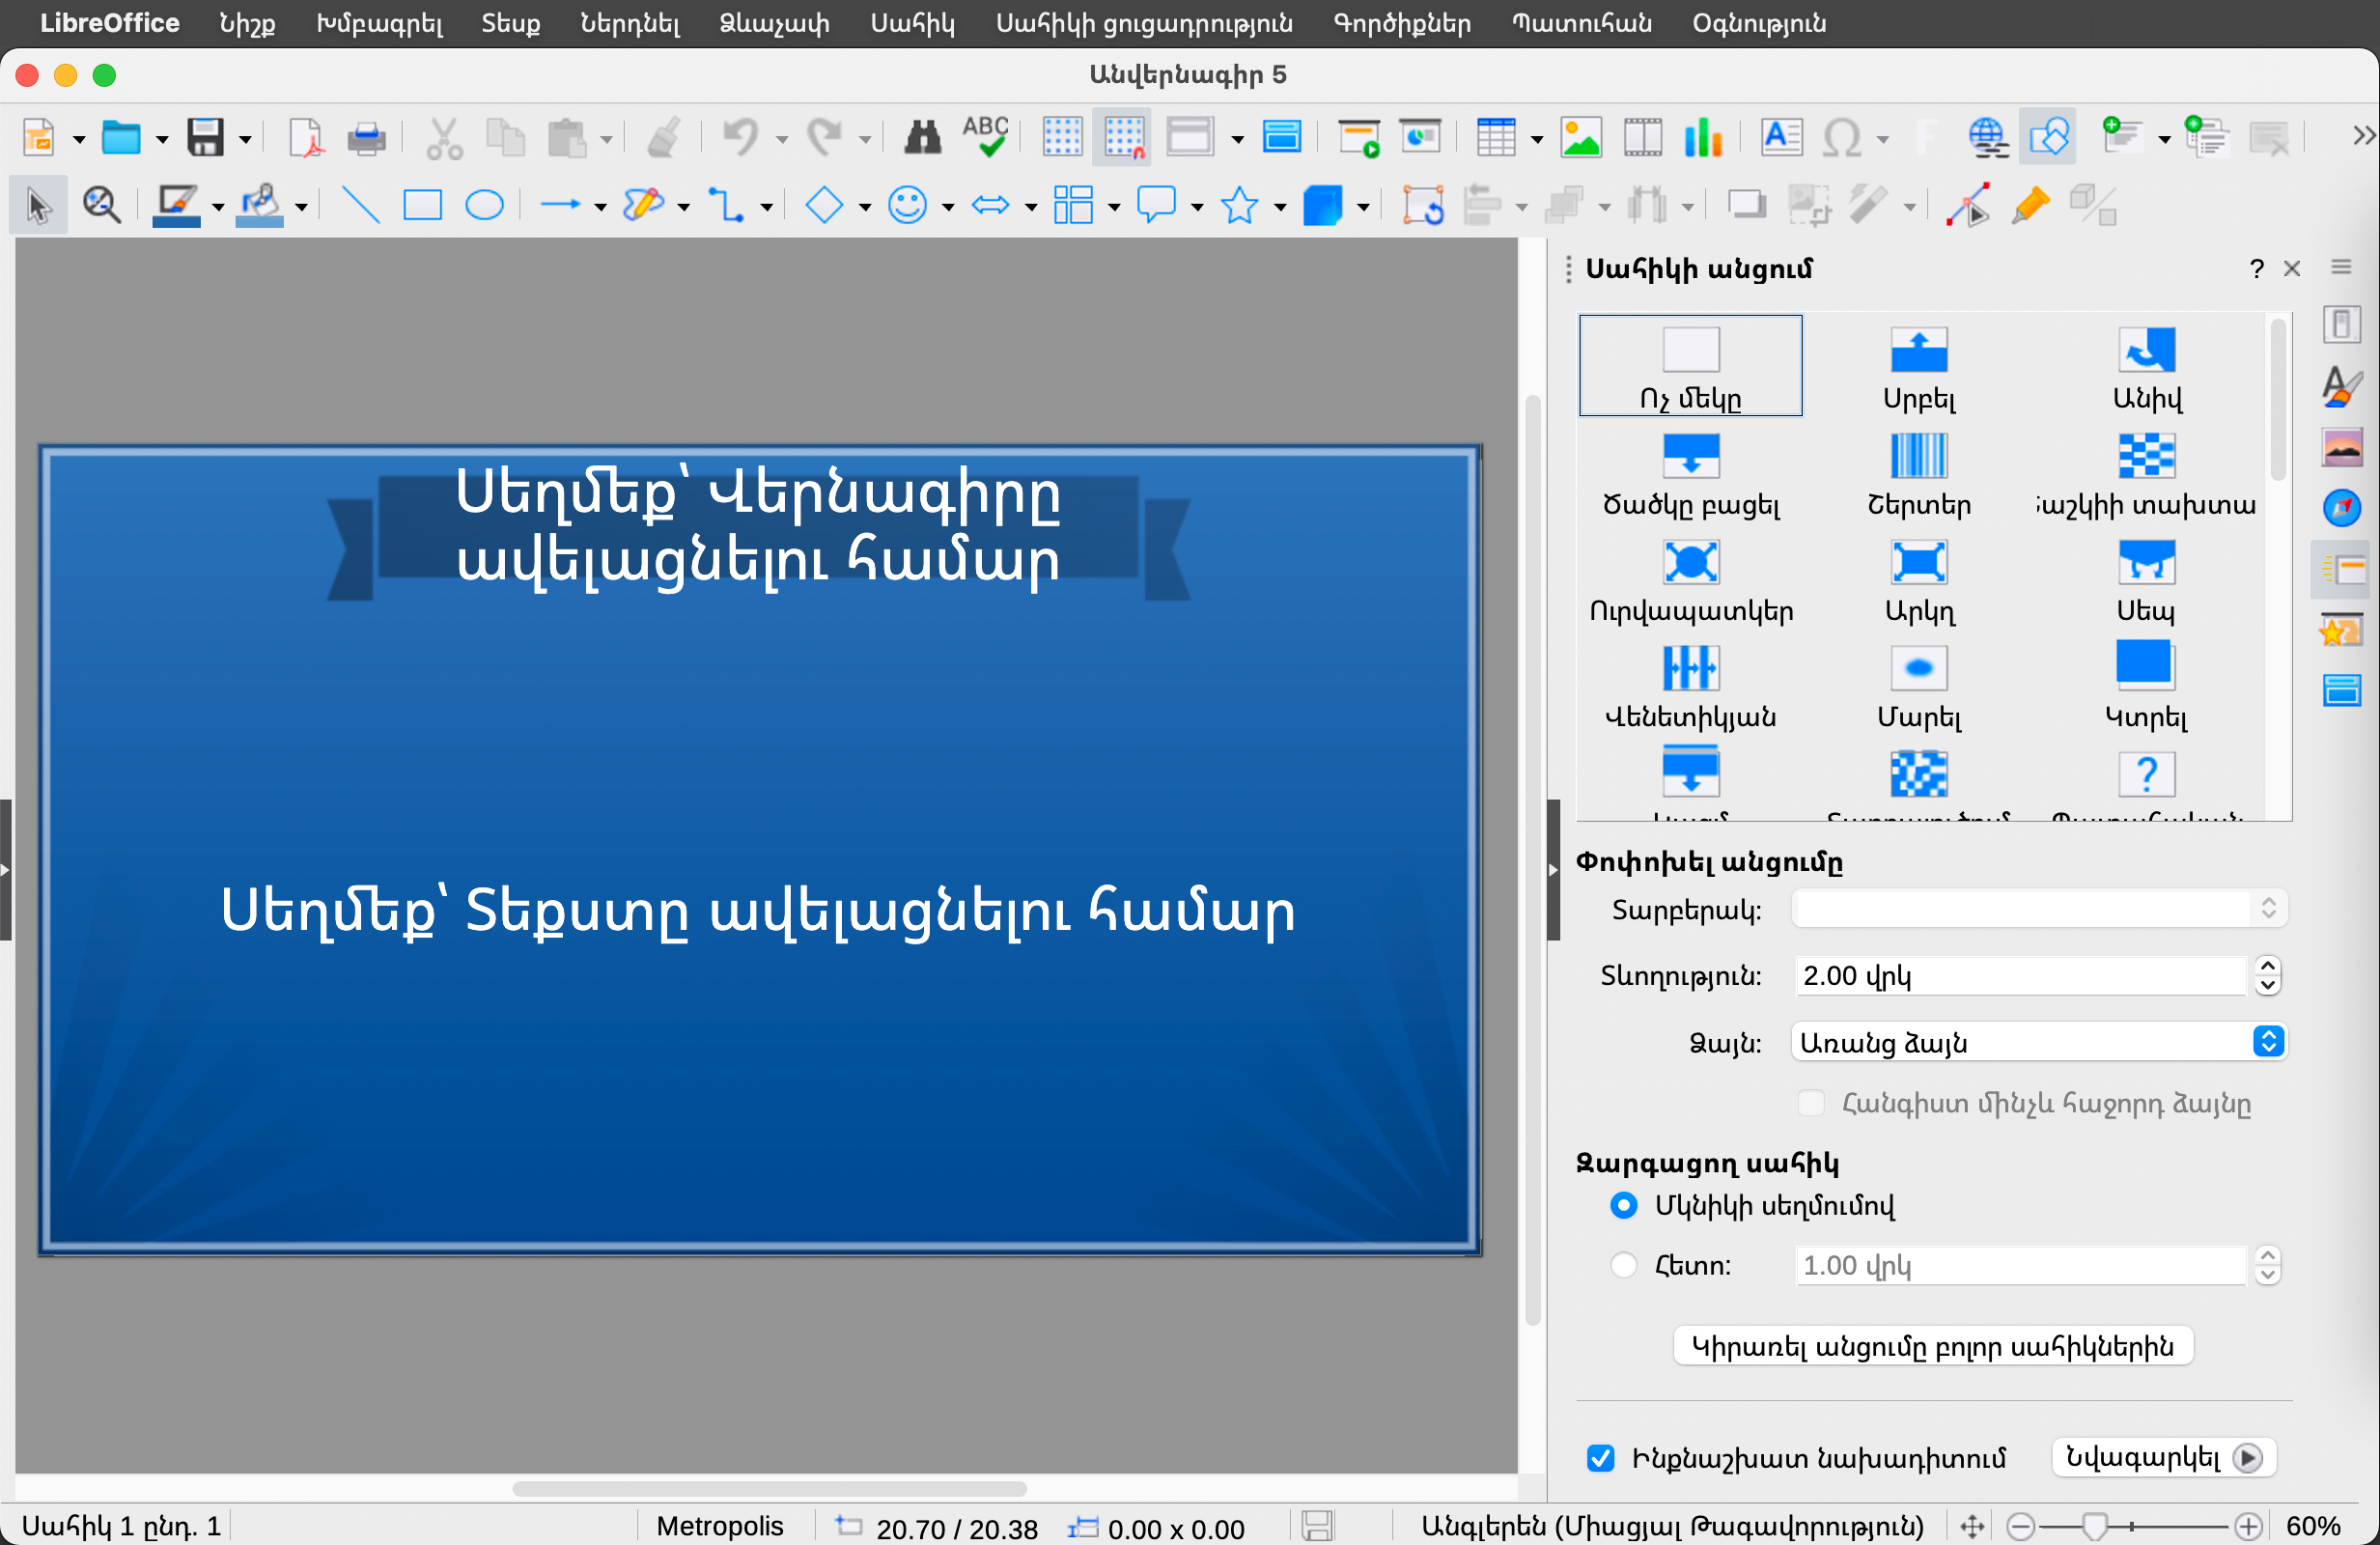 LibreOffice Impress in Armenian